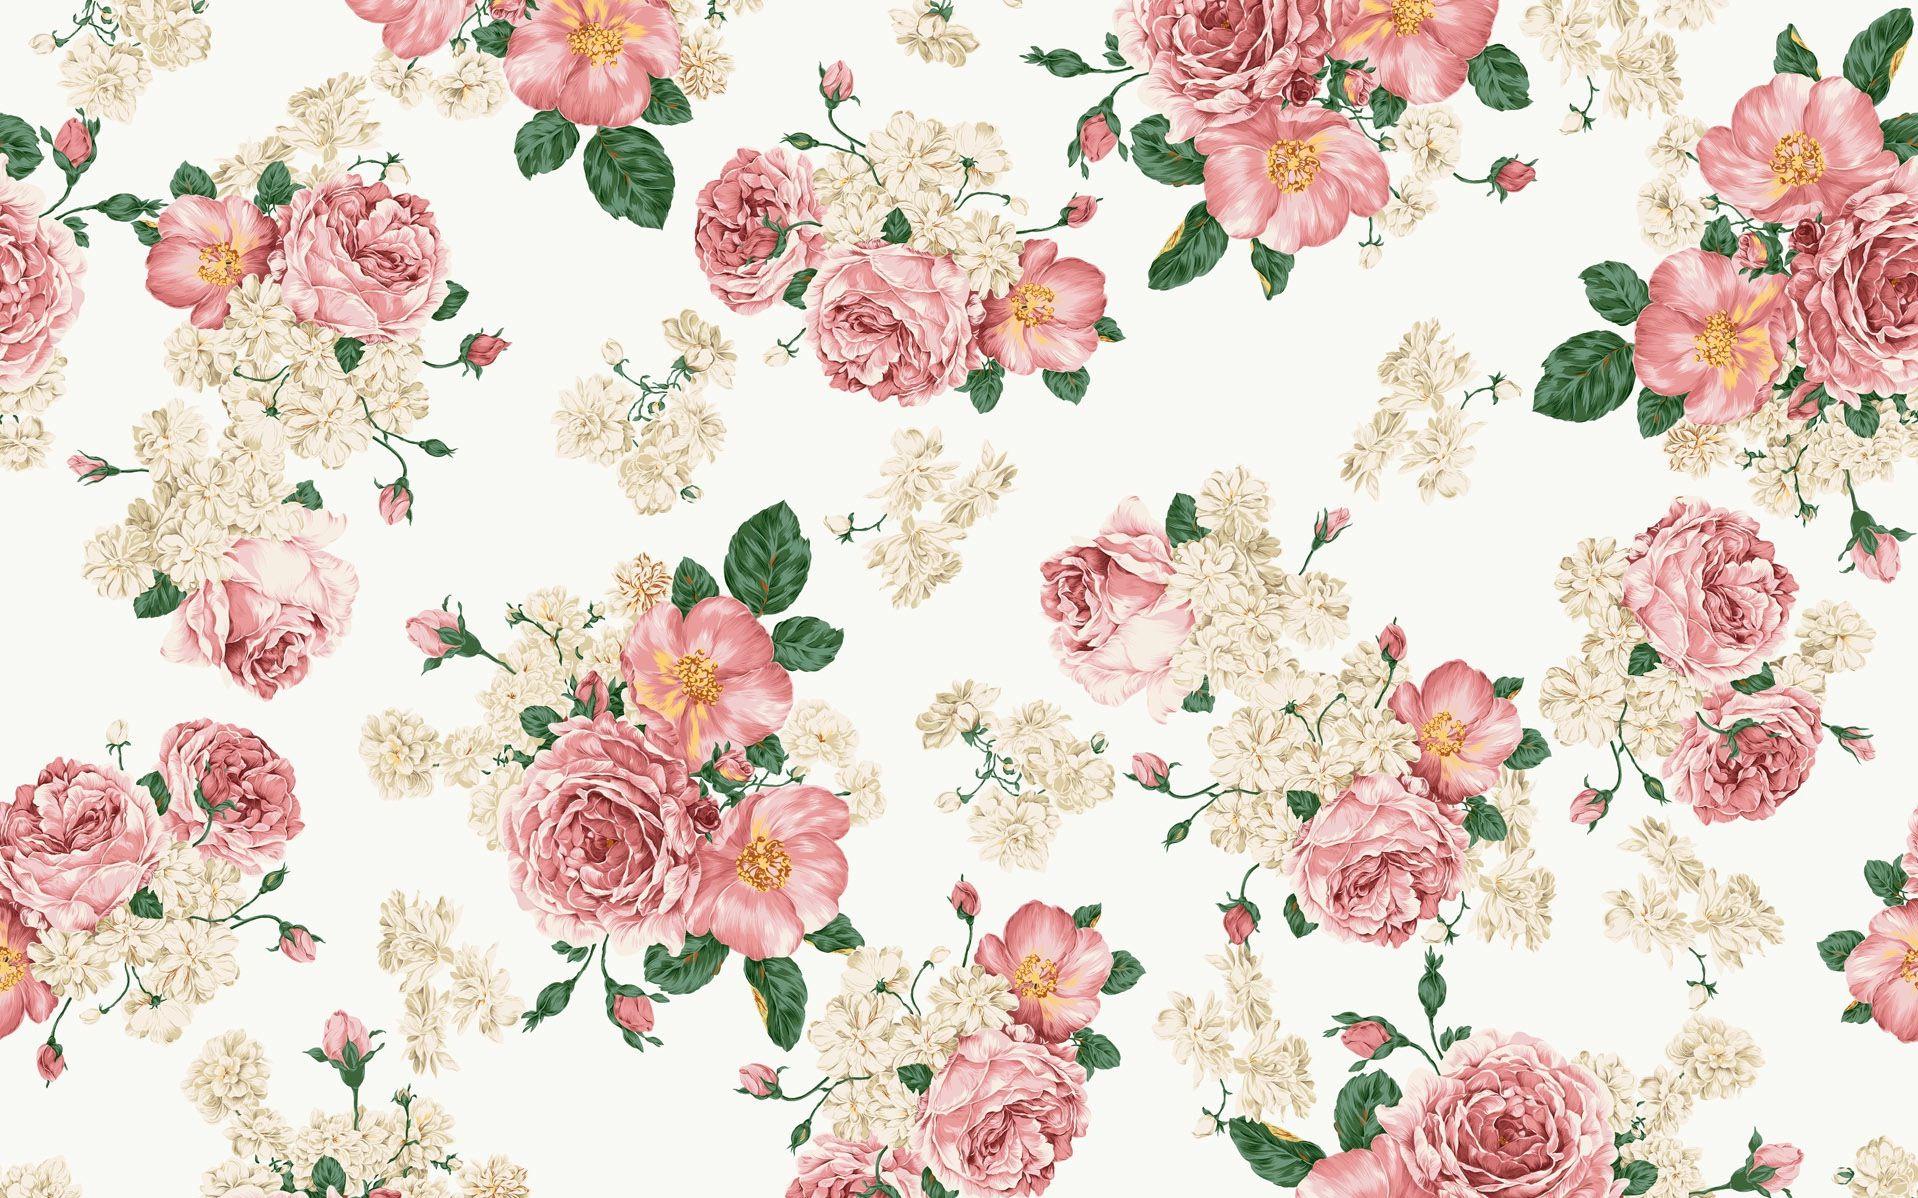 vintage flower background tumblr 11. Background Check All